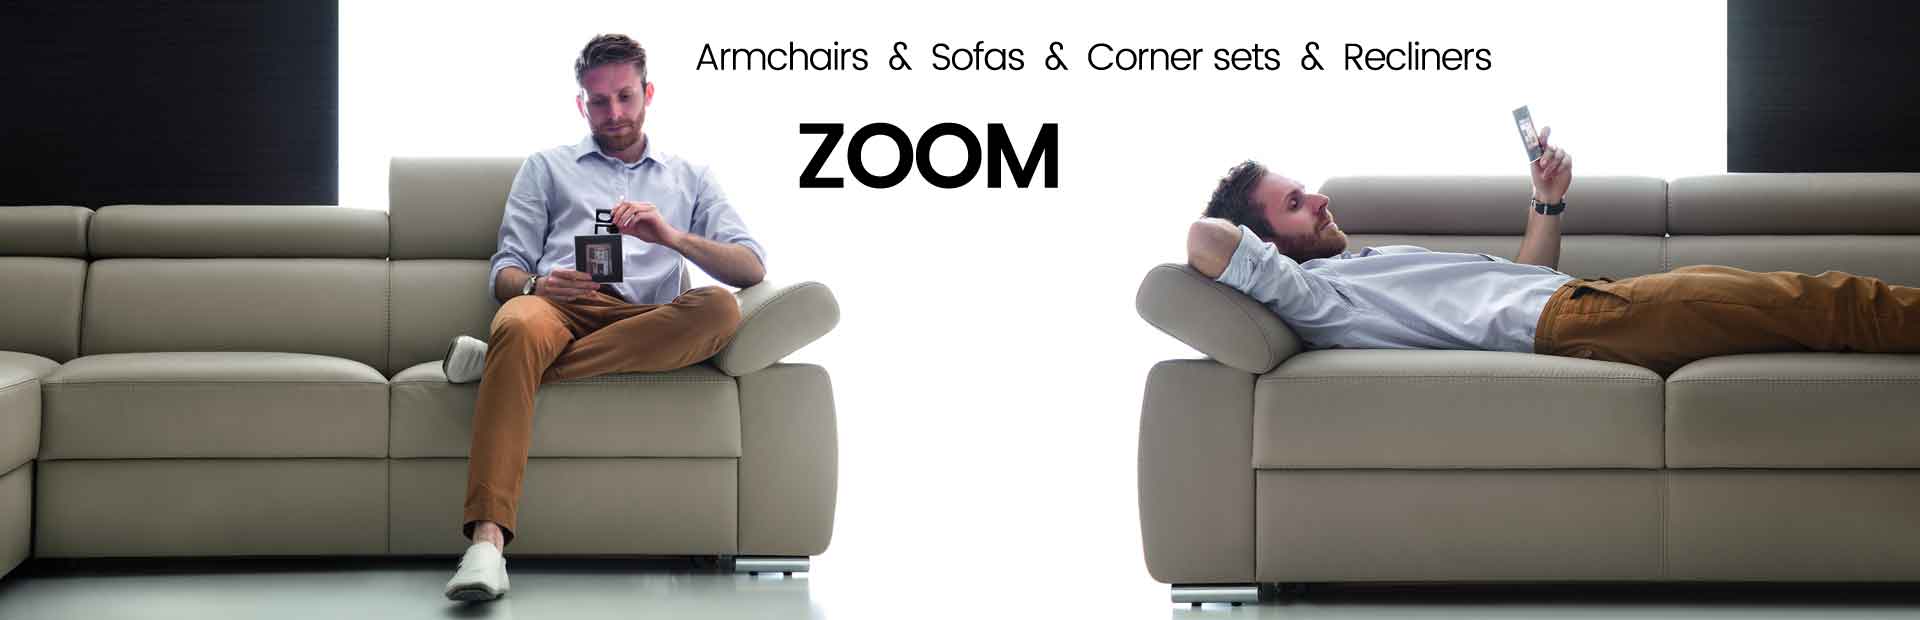 sofa & corner sets Zoom